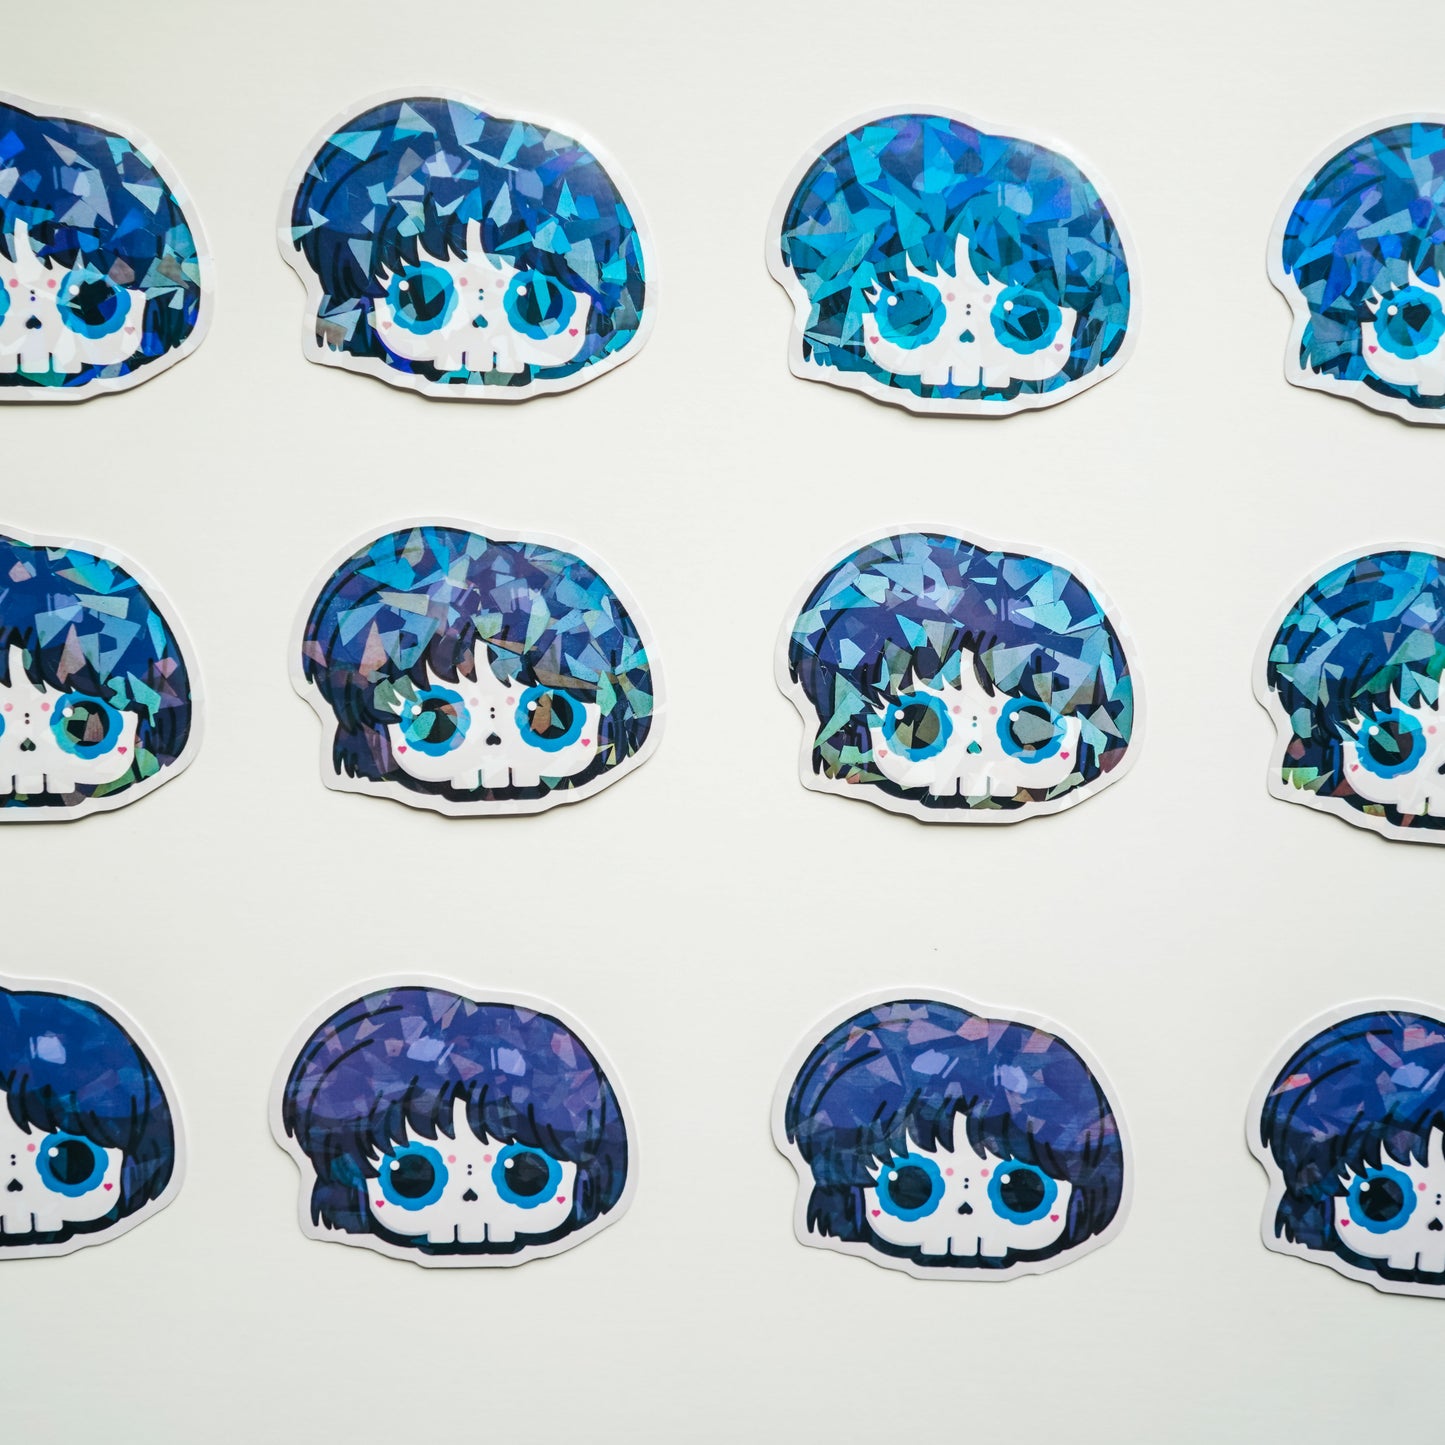 Akane Tendo Skull Bubble-free sticker (Vinyl Holographic Broken Glass)